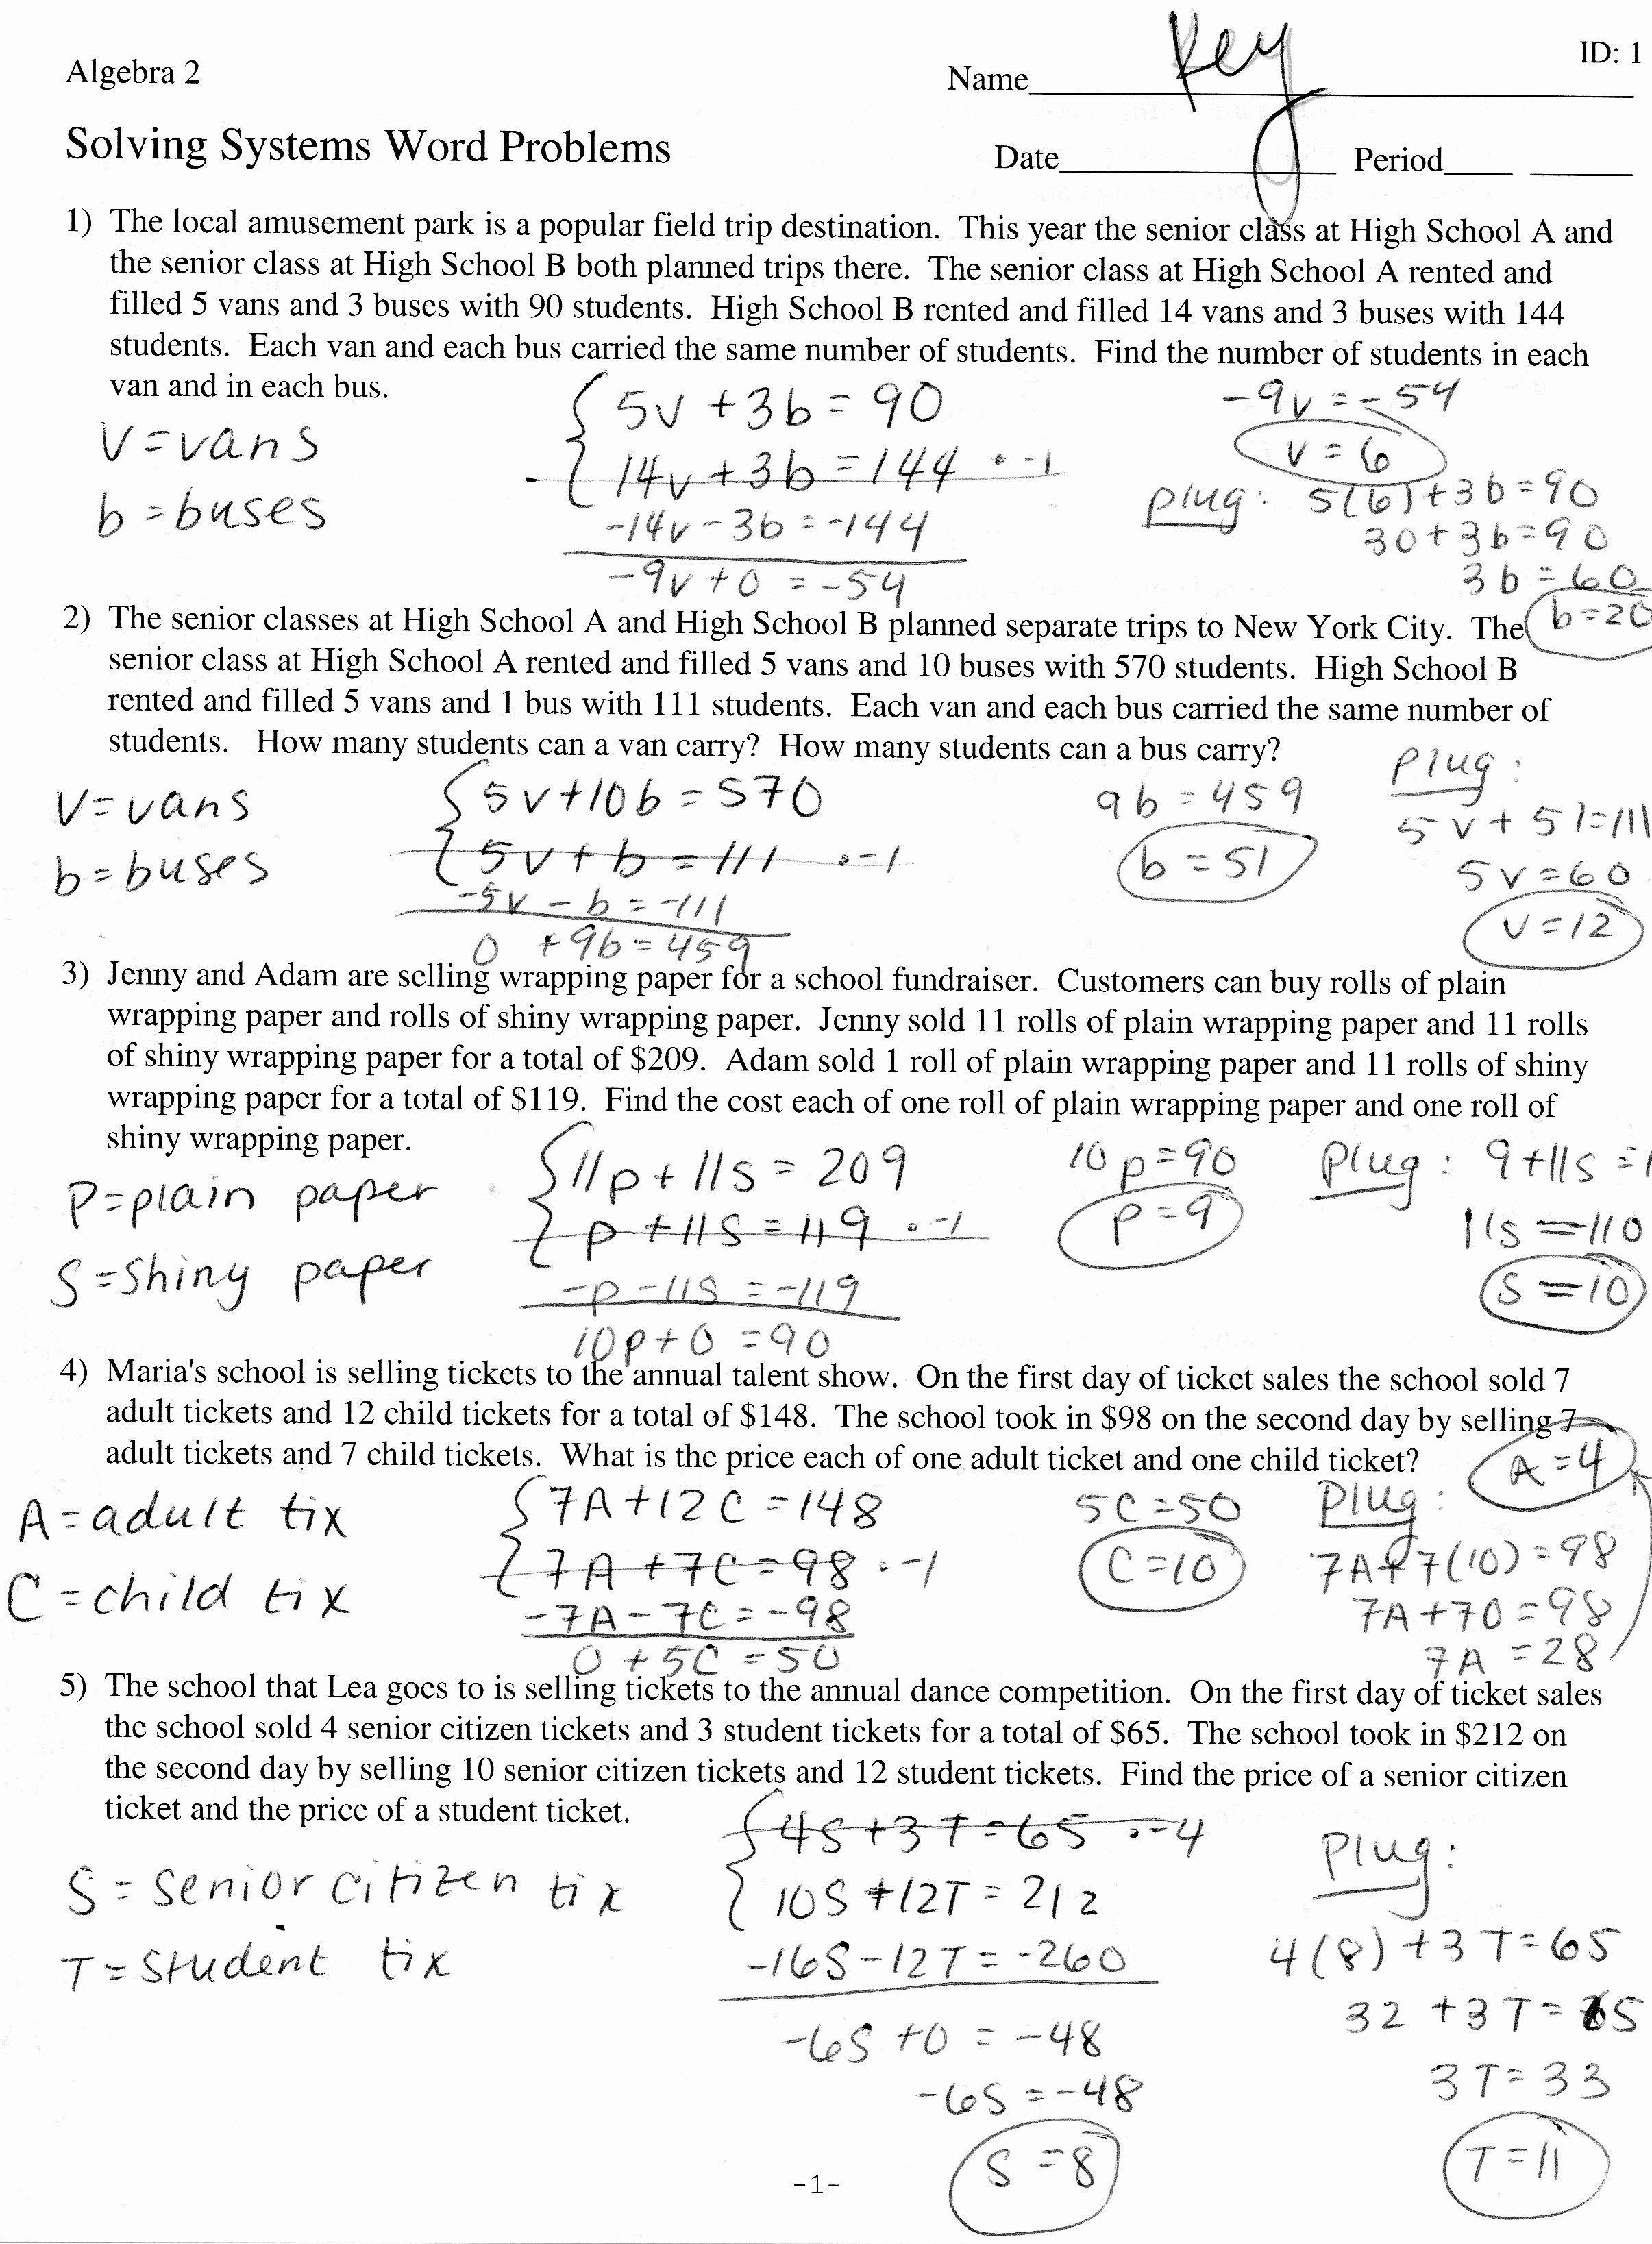 Quadratic Equations Word Problems Worksheet Inspirational Word Problems with Quadratic Equations Worksheet